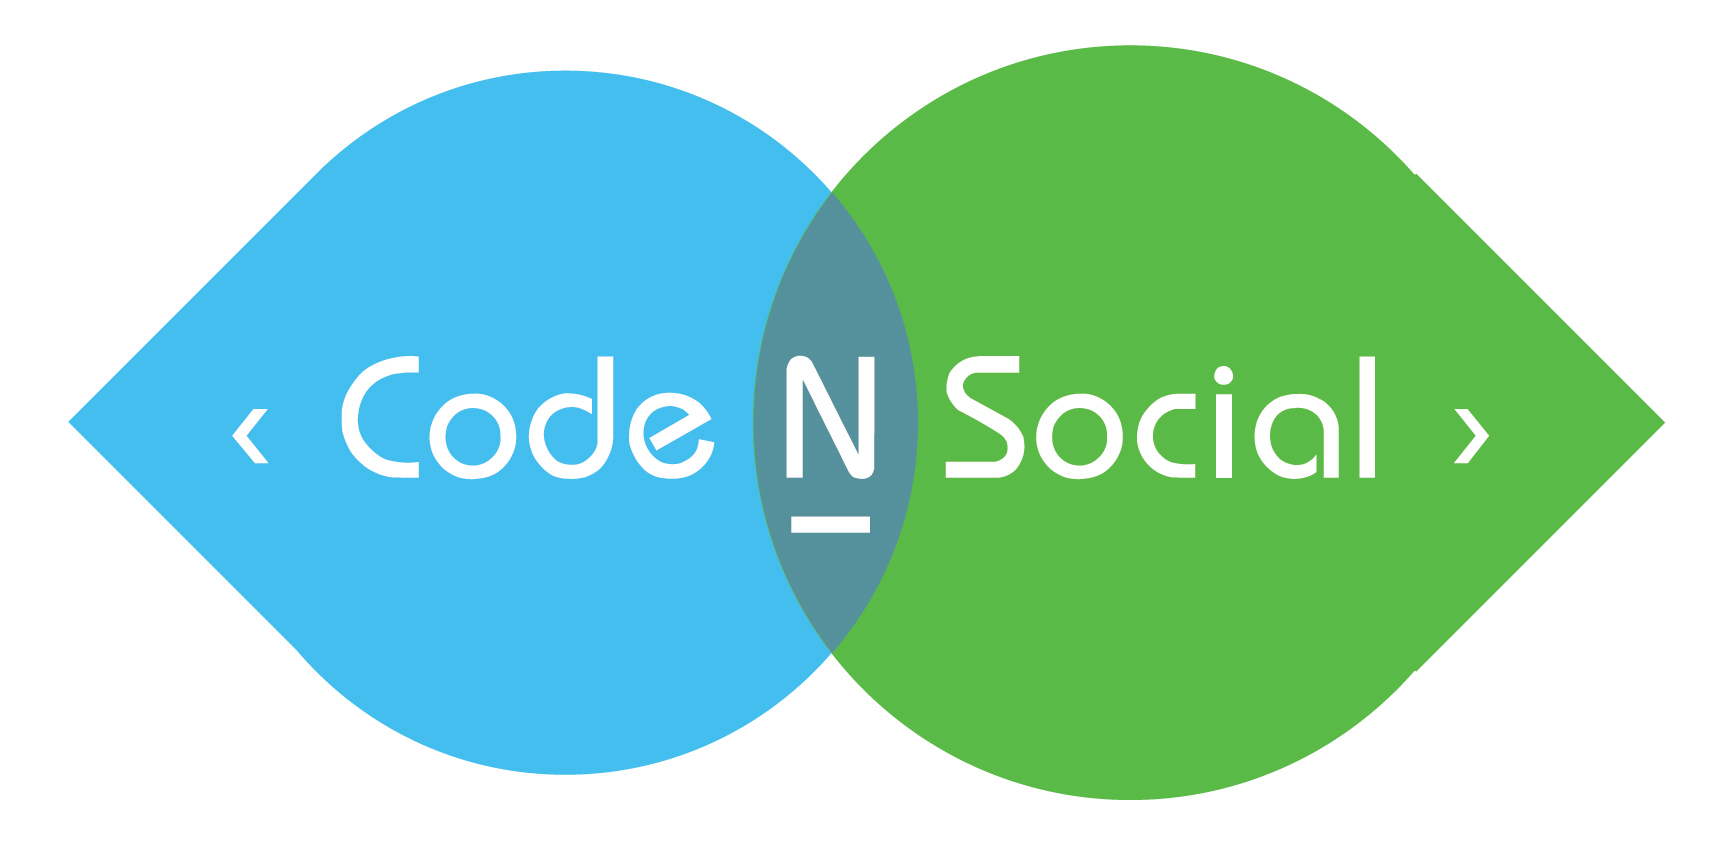 Code-n-Social logo